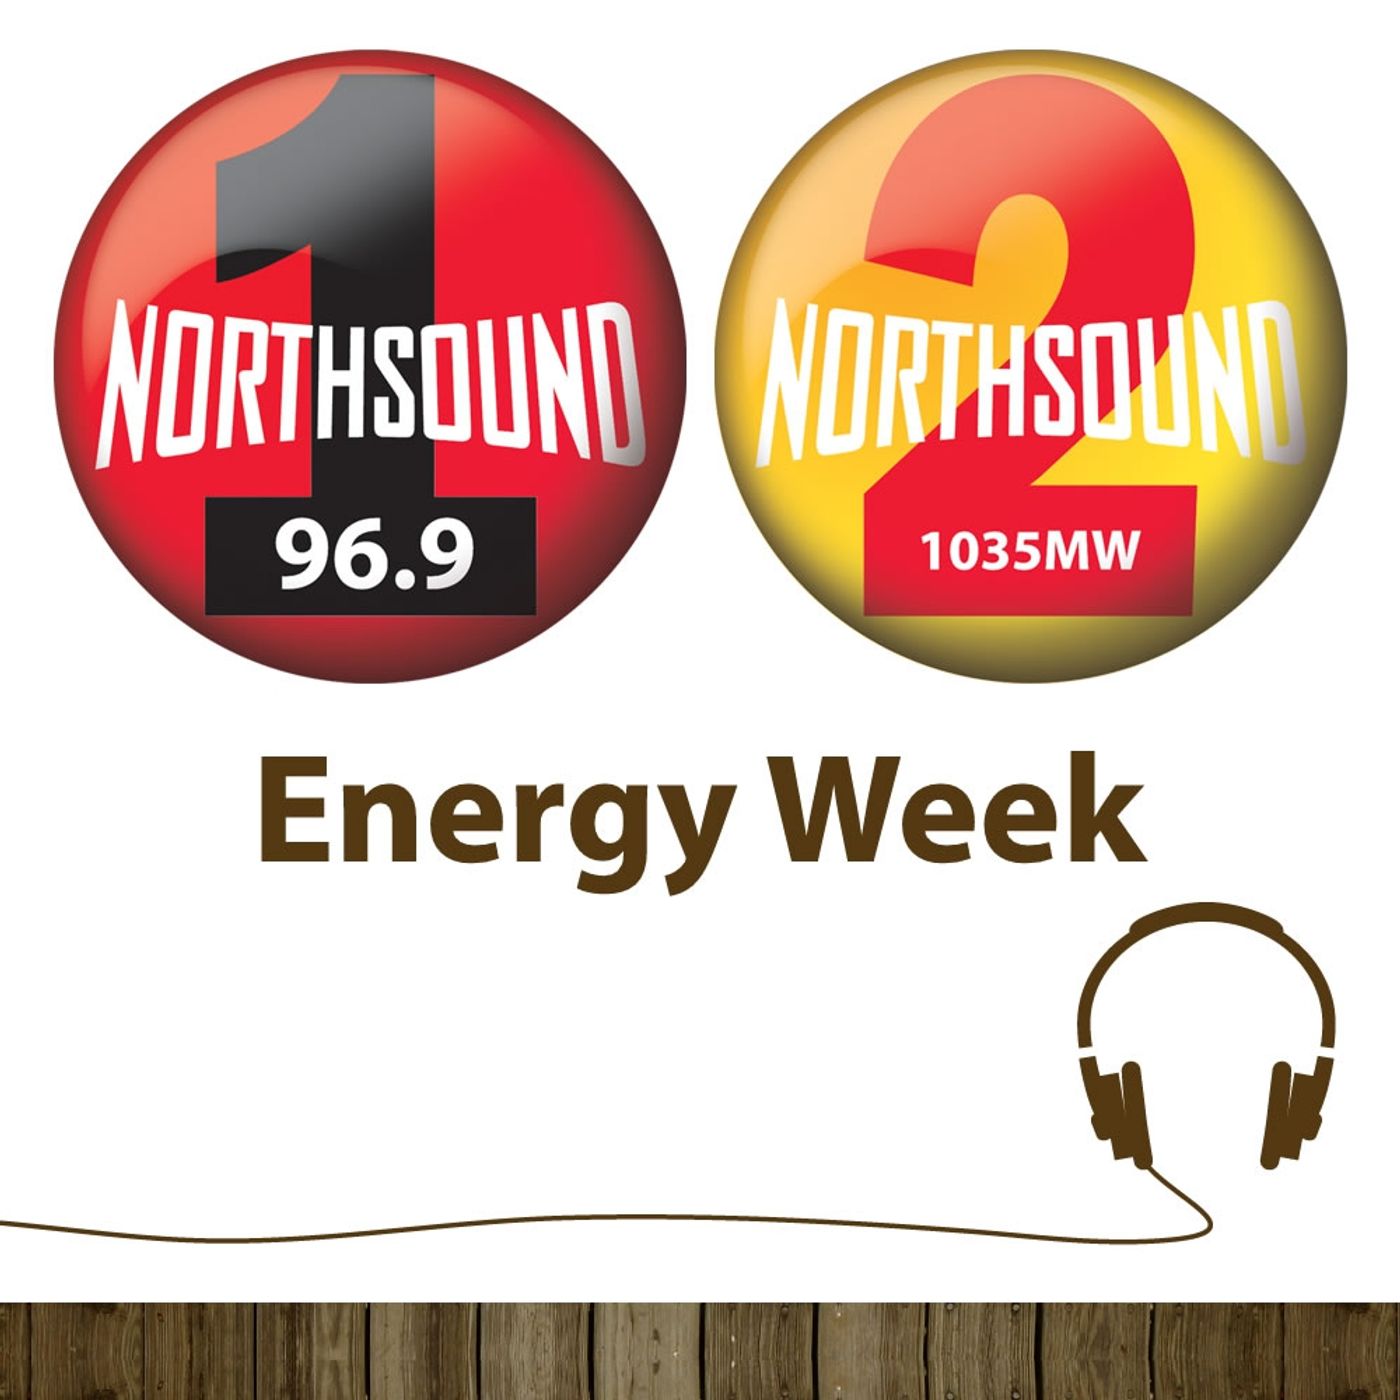 Northsound Energy Week 14.2.14